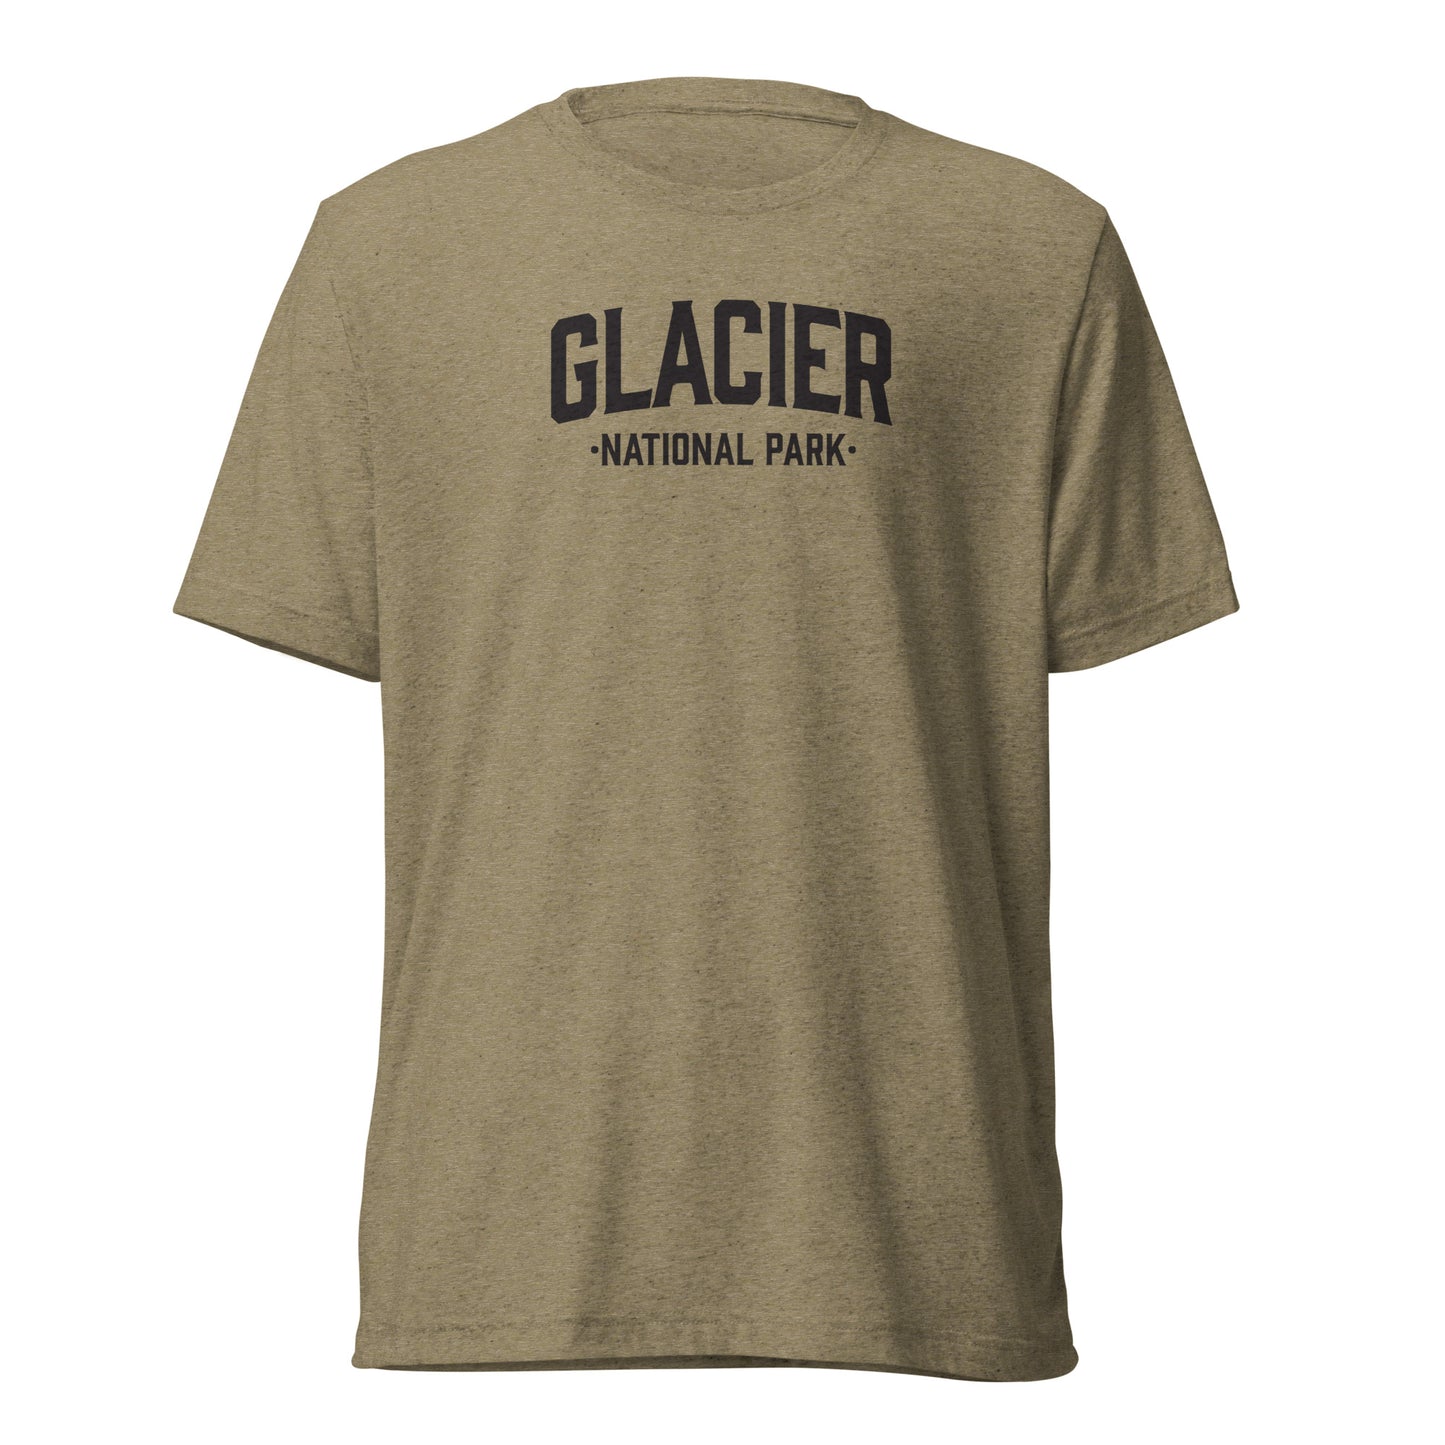 Premium Everyday Glacier National Park Tee